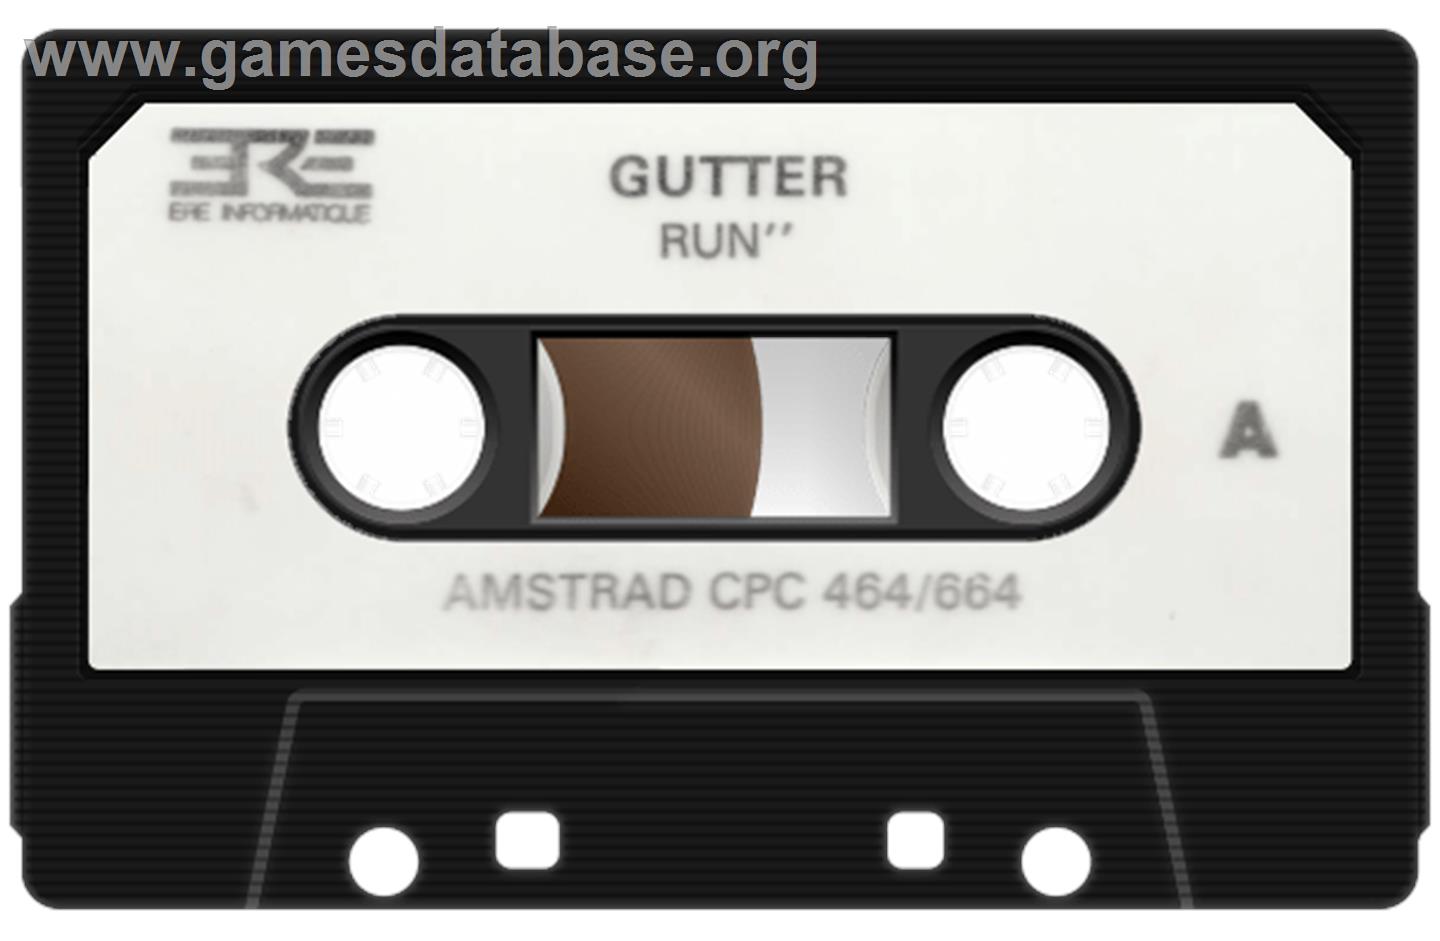 Gutter - Amstrad CPC - Artwork - Cartridge